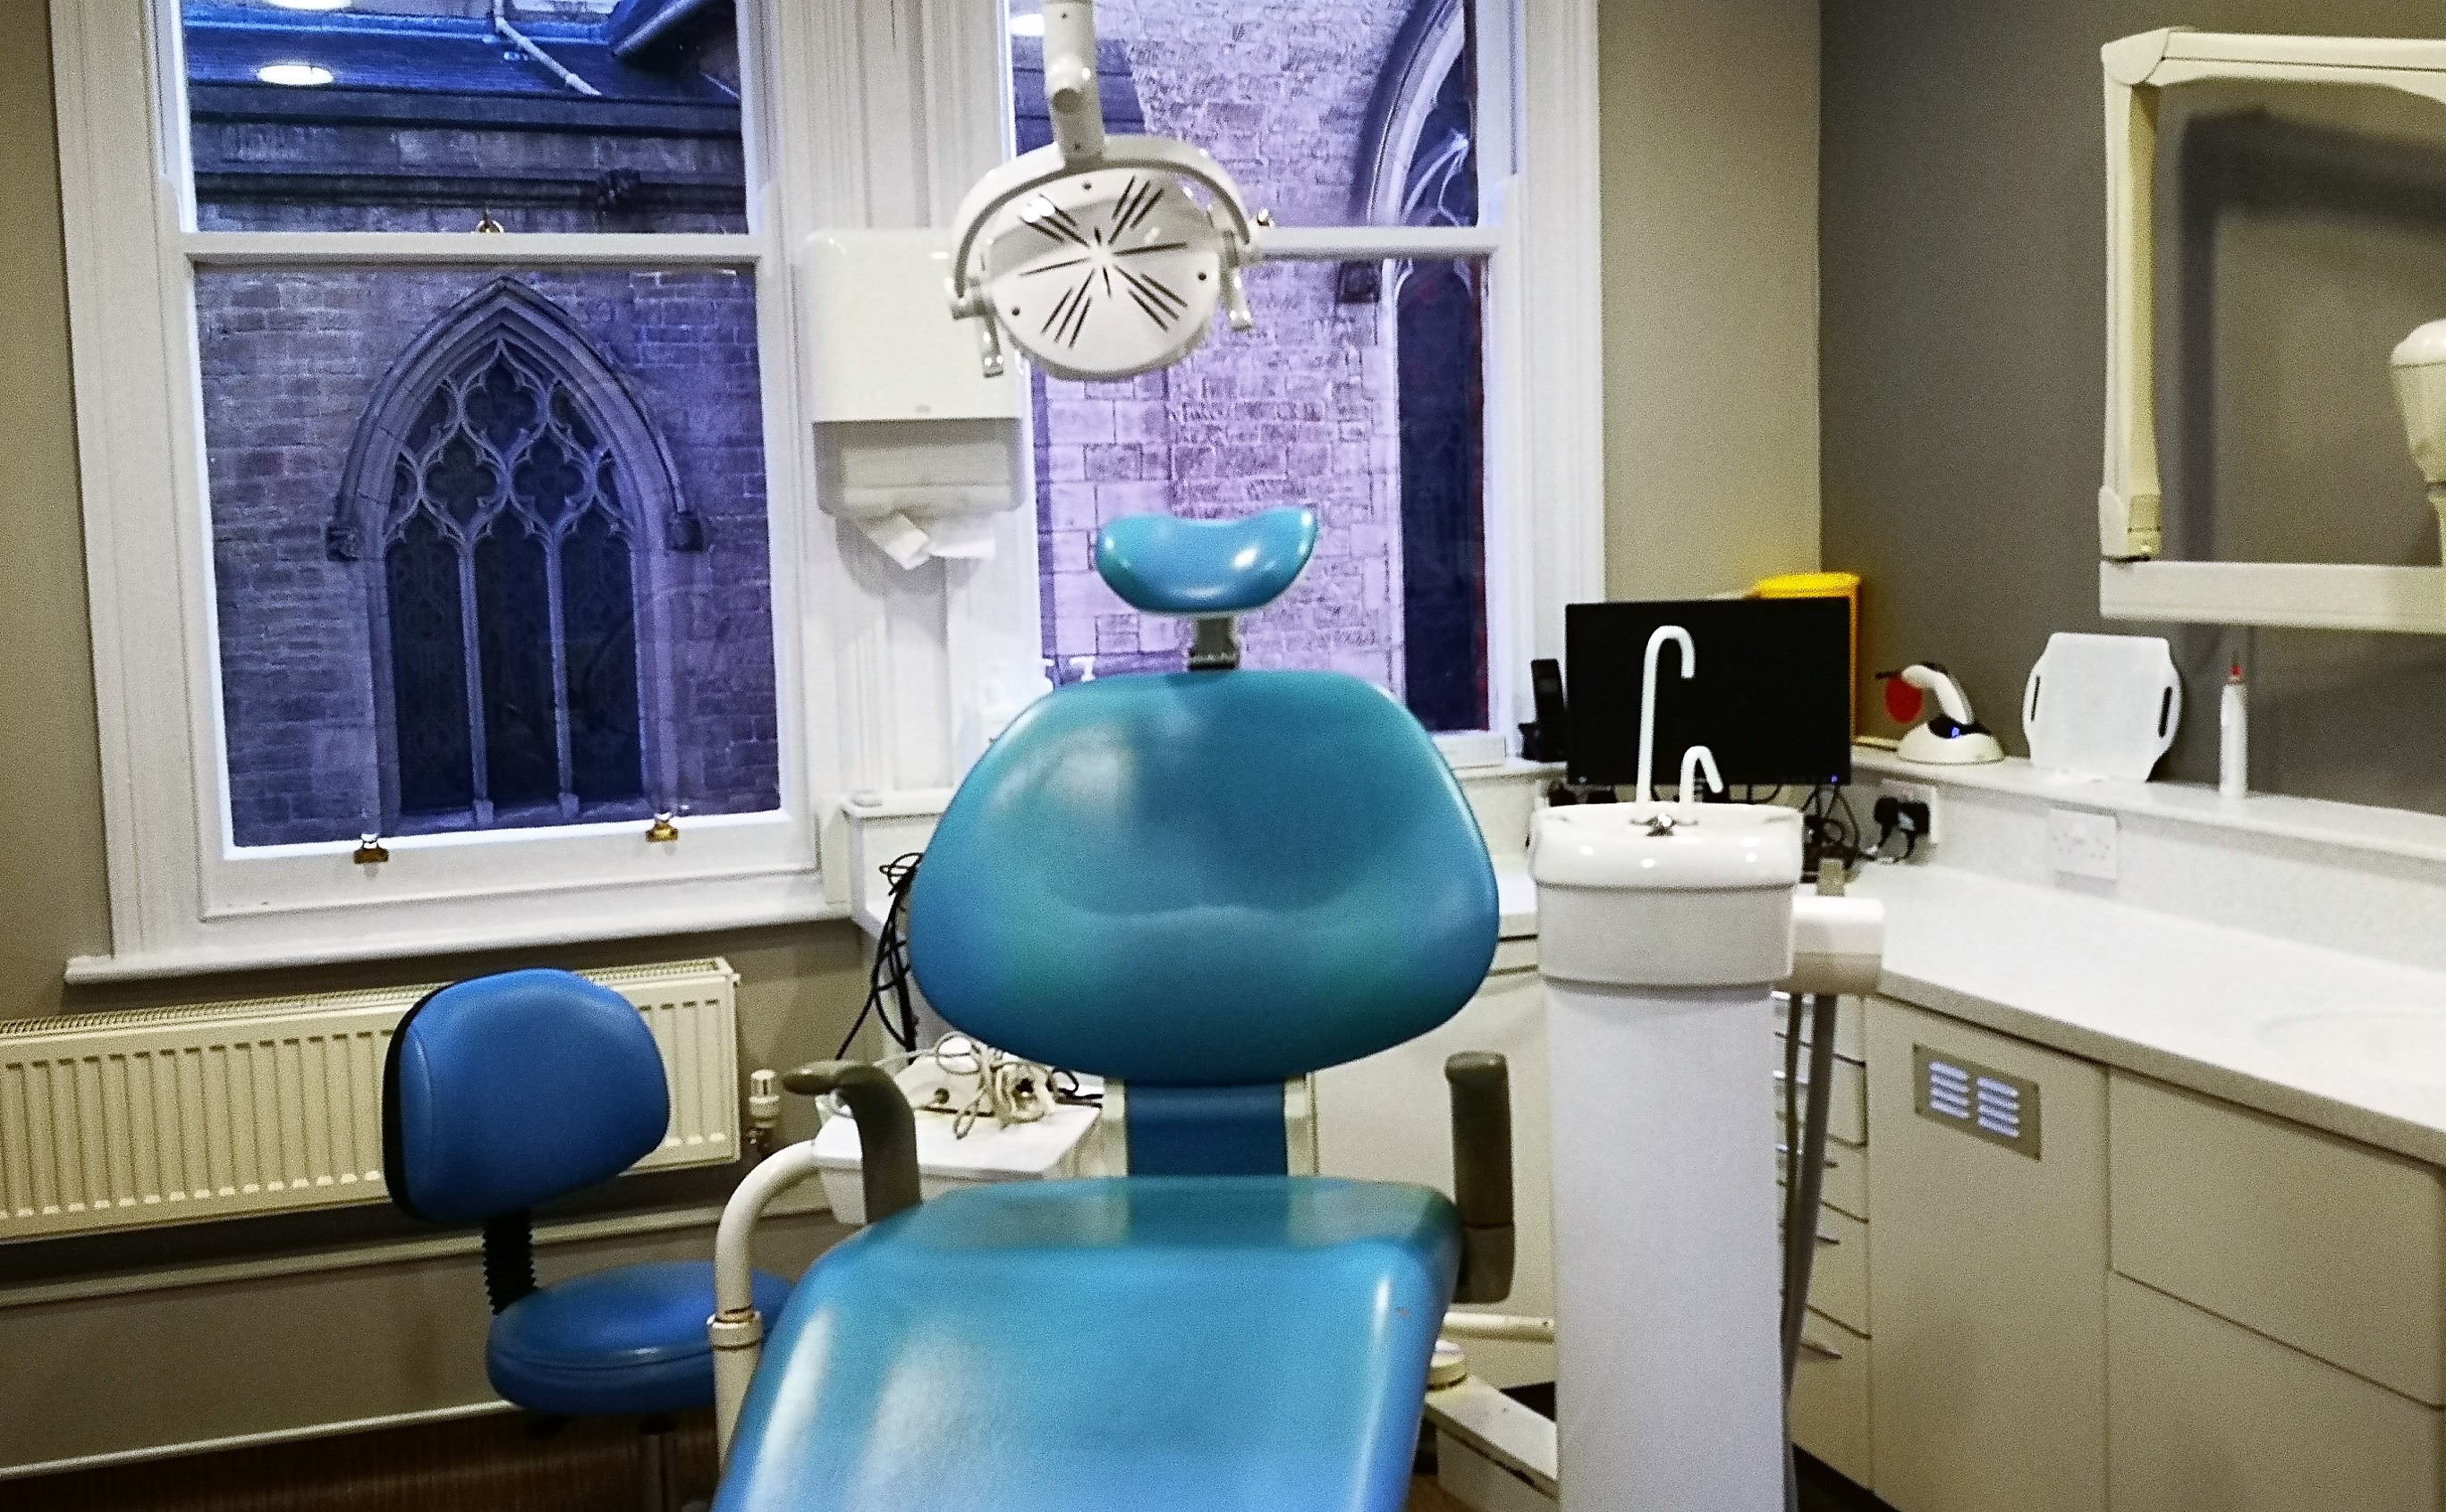 Images Portman Dental & Implant Clinic